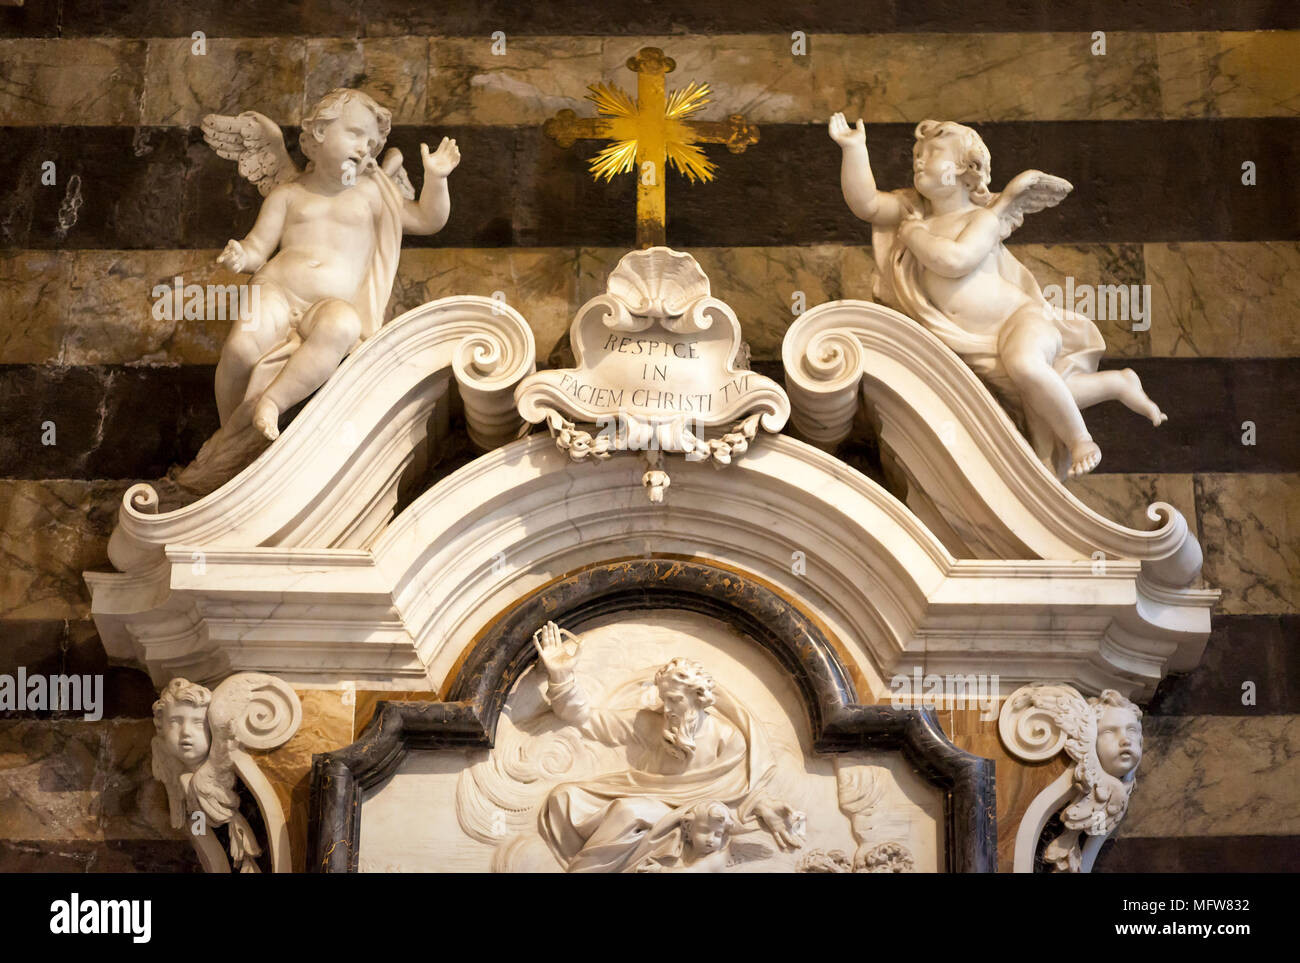 Cherubs and ornate marble carvings along wall inside Pisa Cathedral (Santa Maria Assunta), Pisa, Tuscany Italy Stock Photo